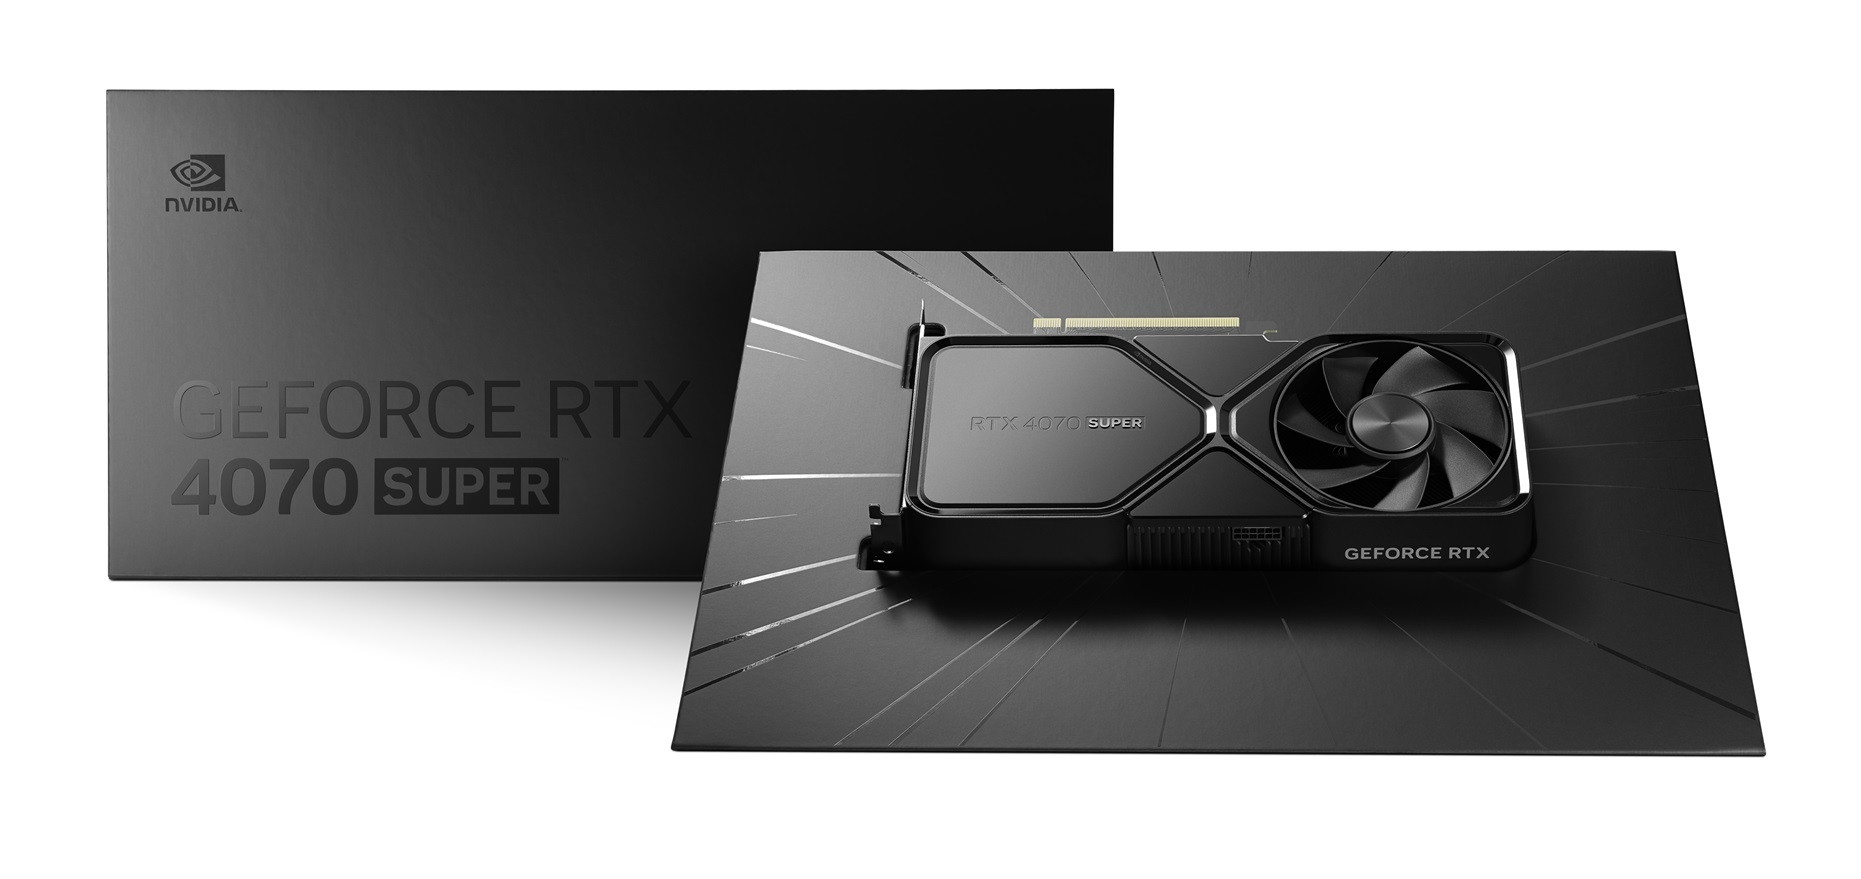 Nvidia GeForce RTX 4070 Super